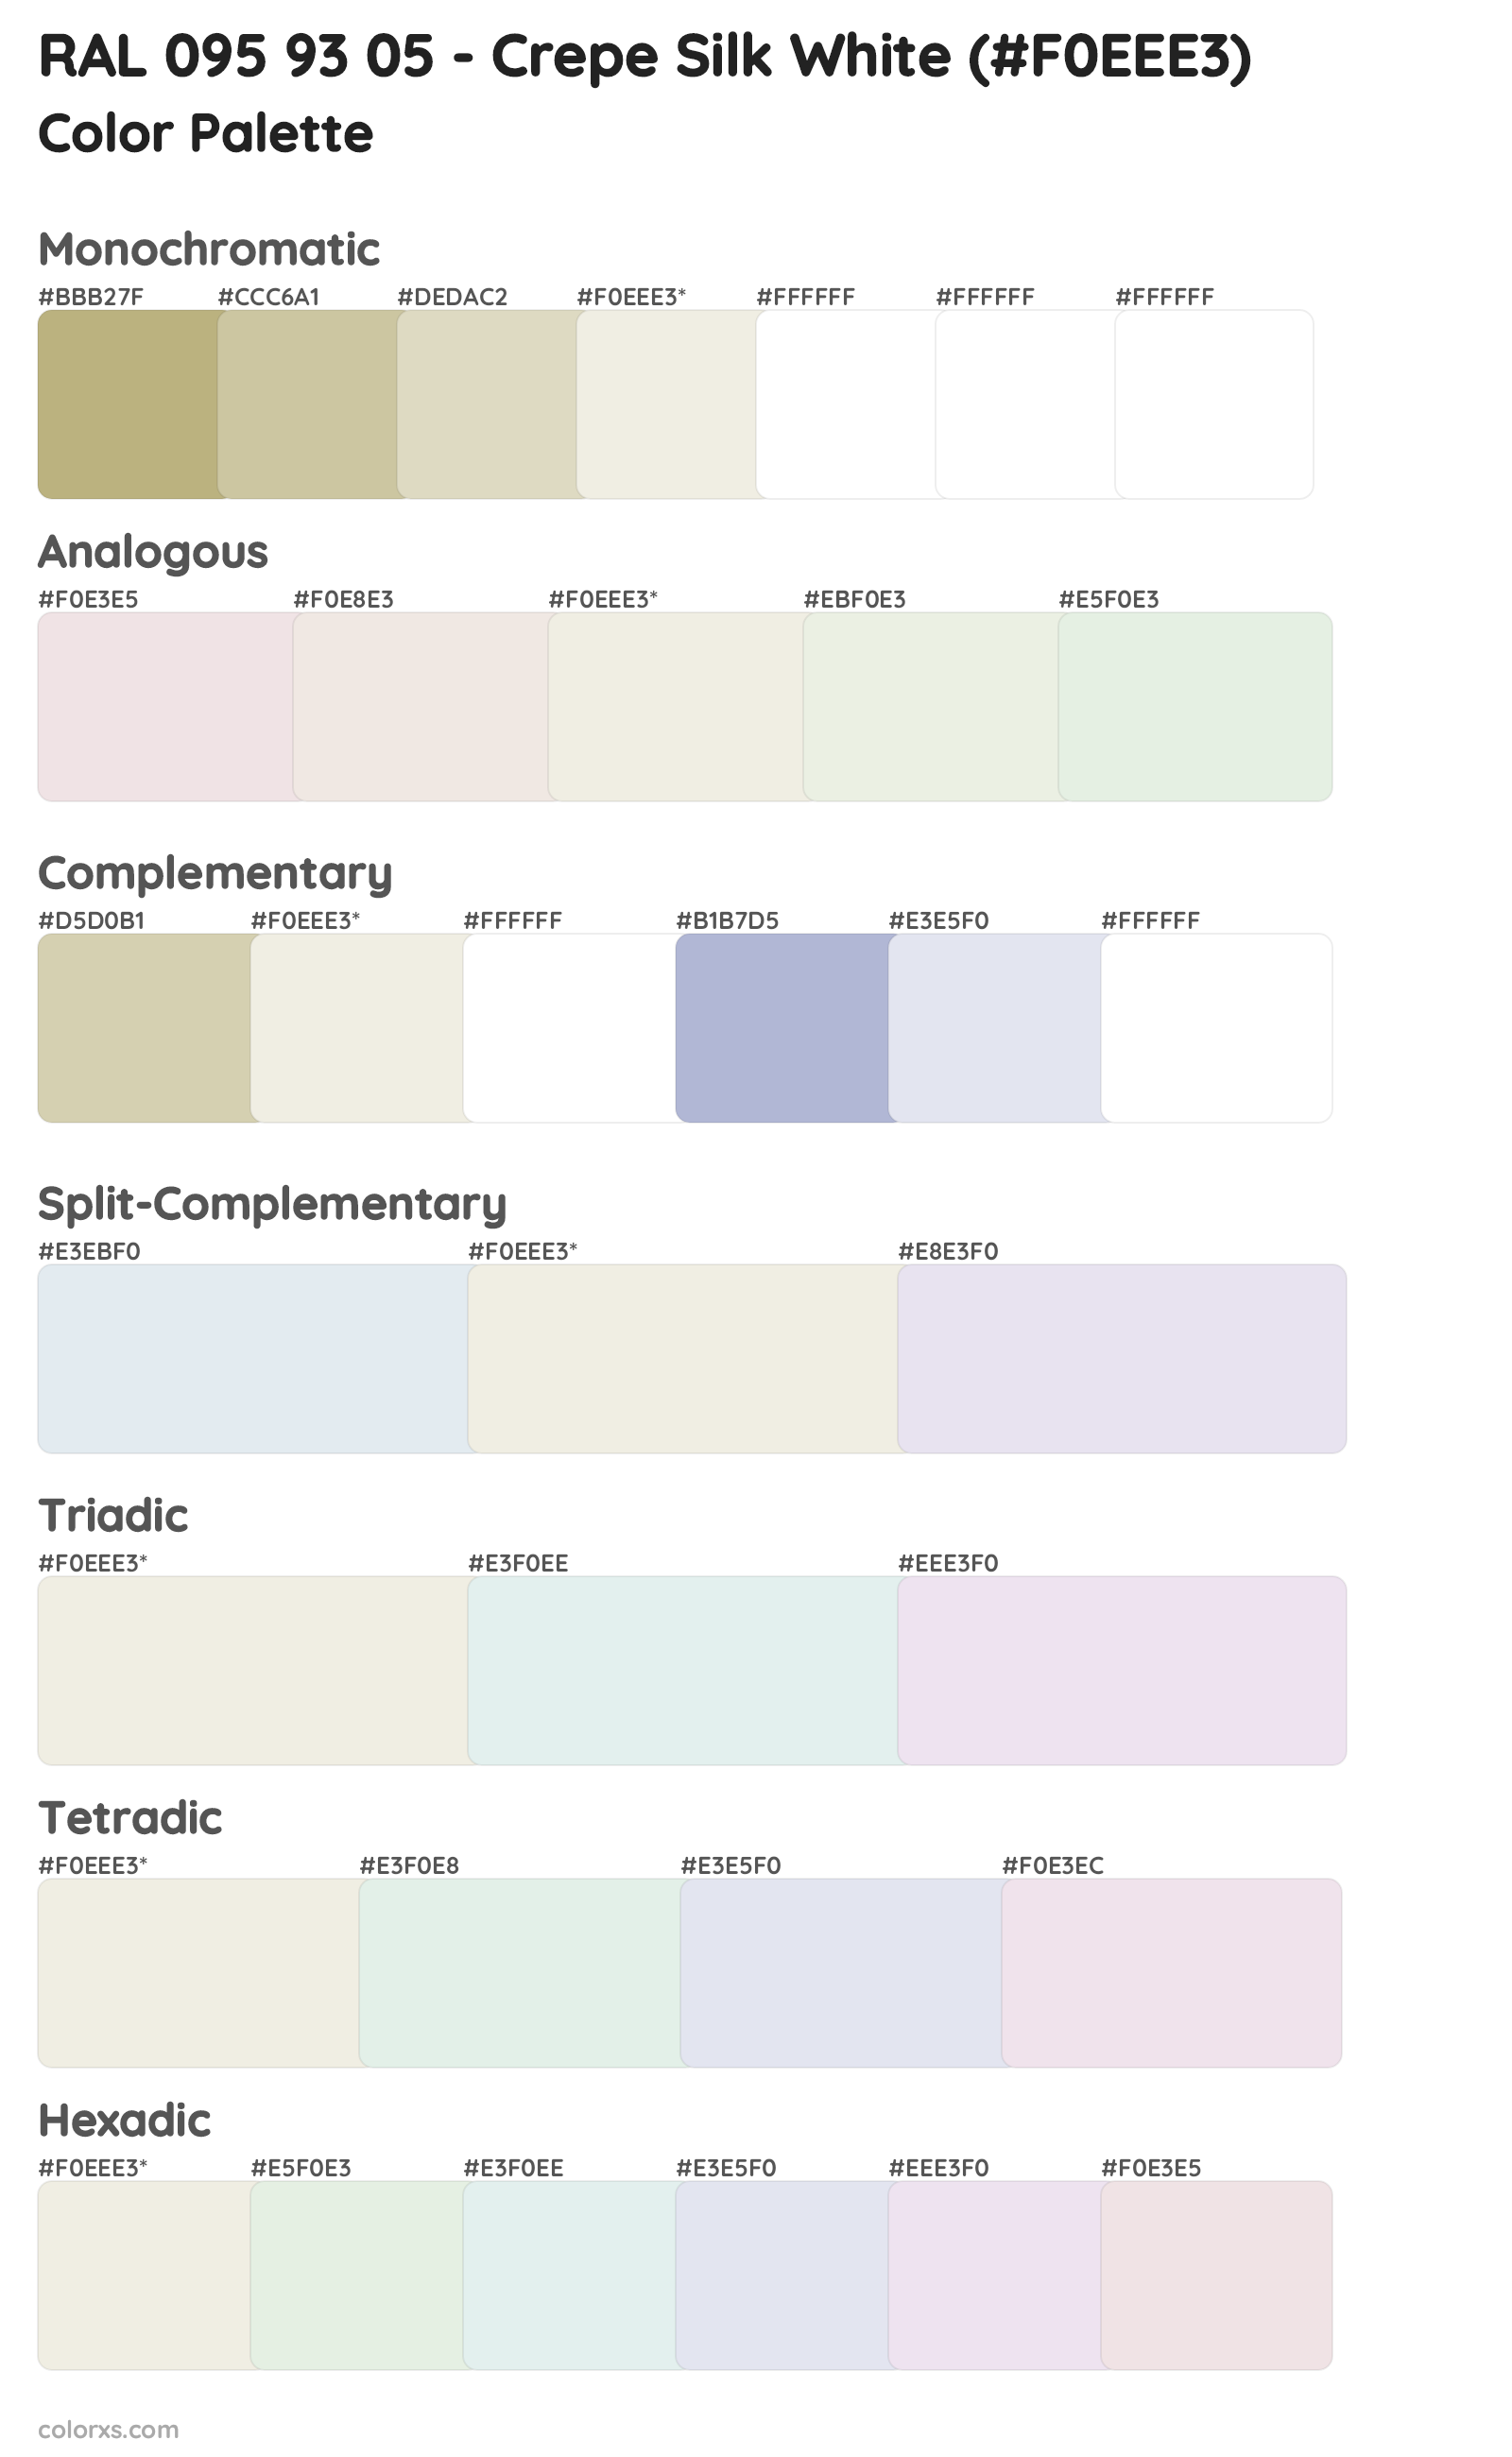 RAL 095 93 05 - Crepe Silk White Color Scheme Palettes